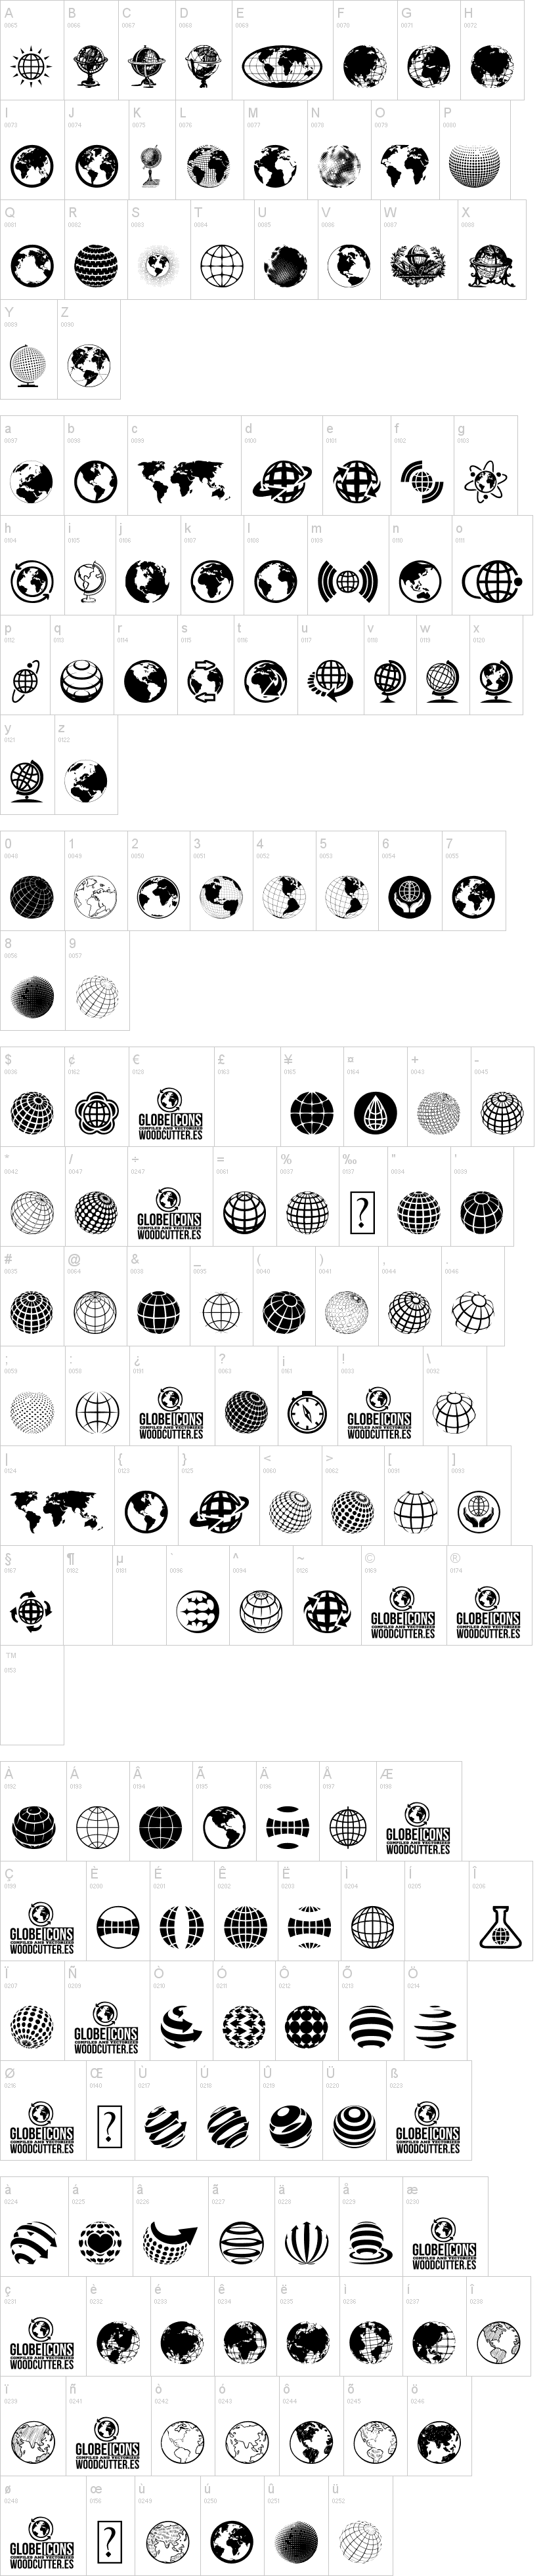 Globe Icons